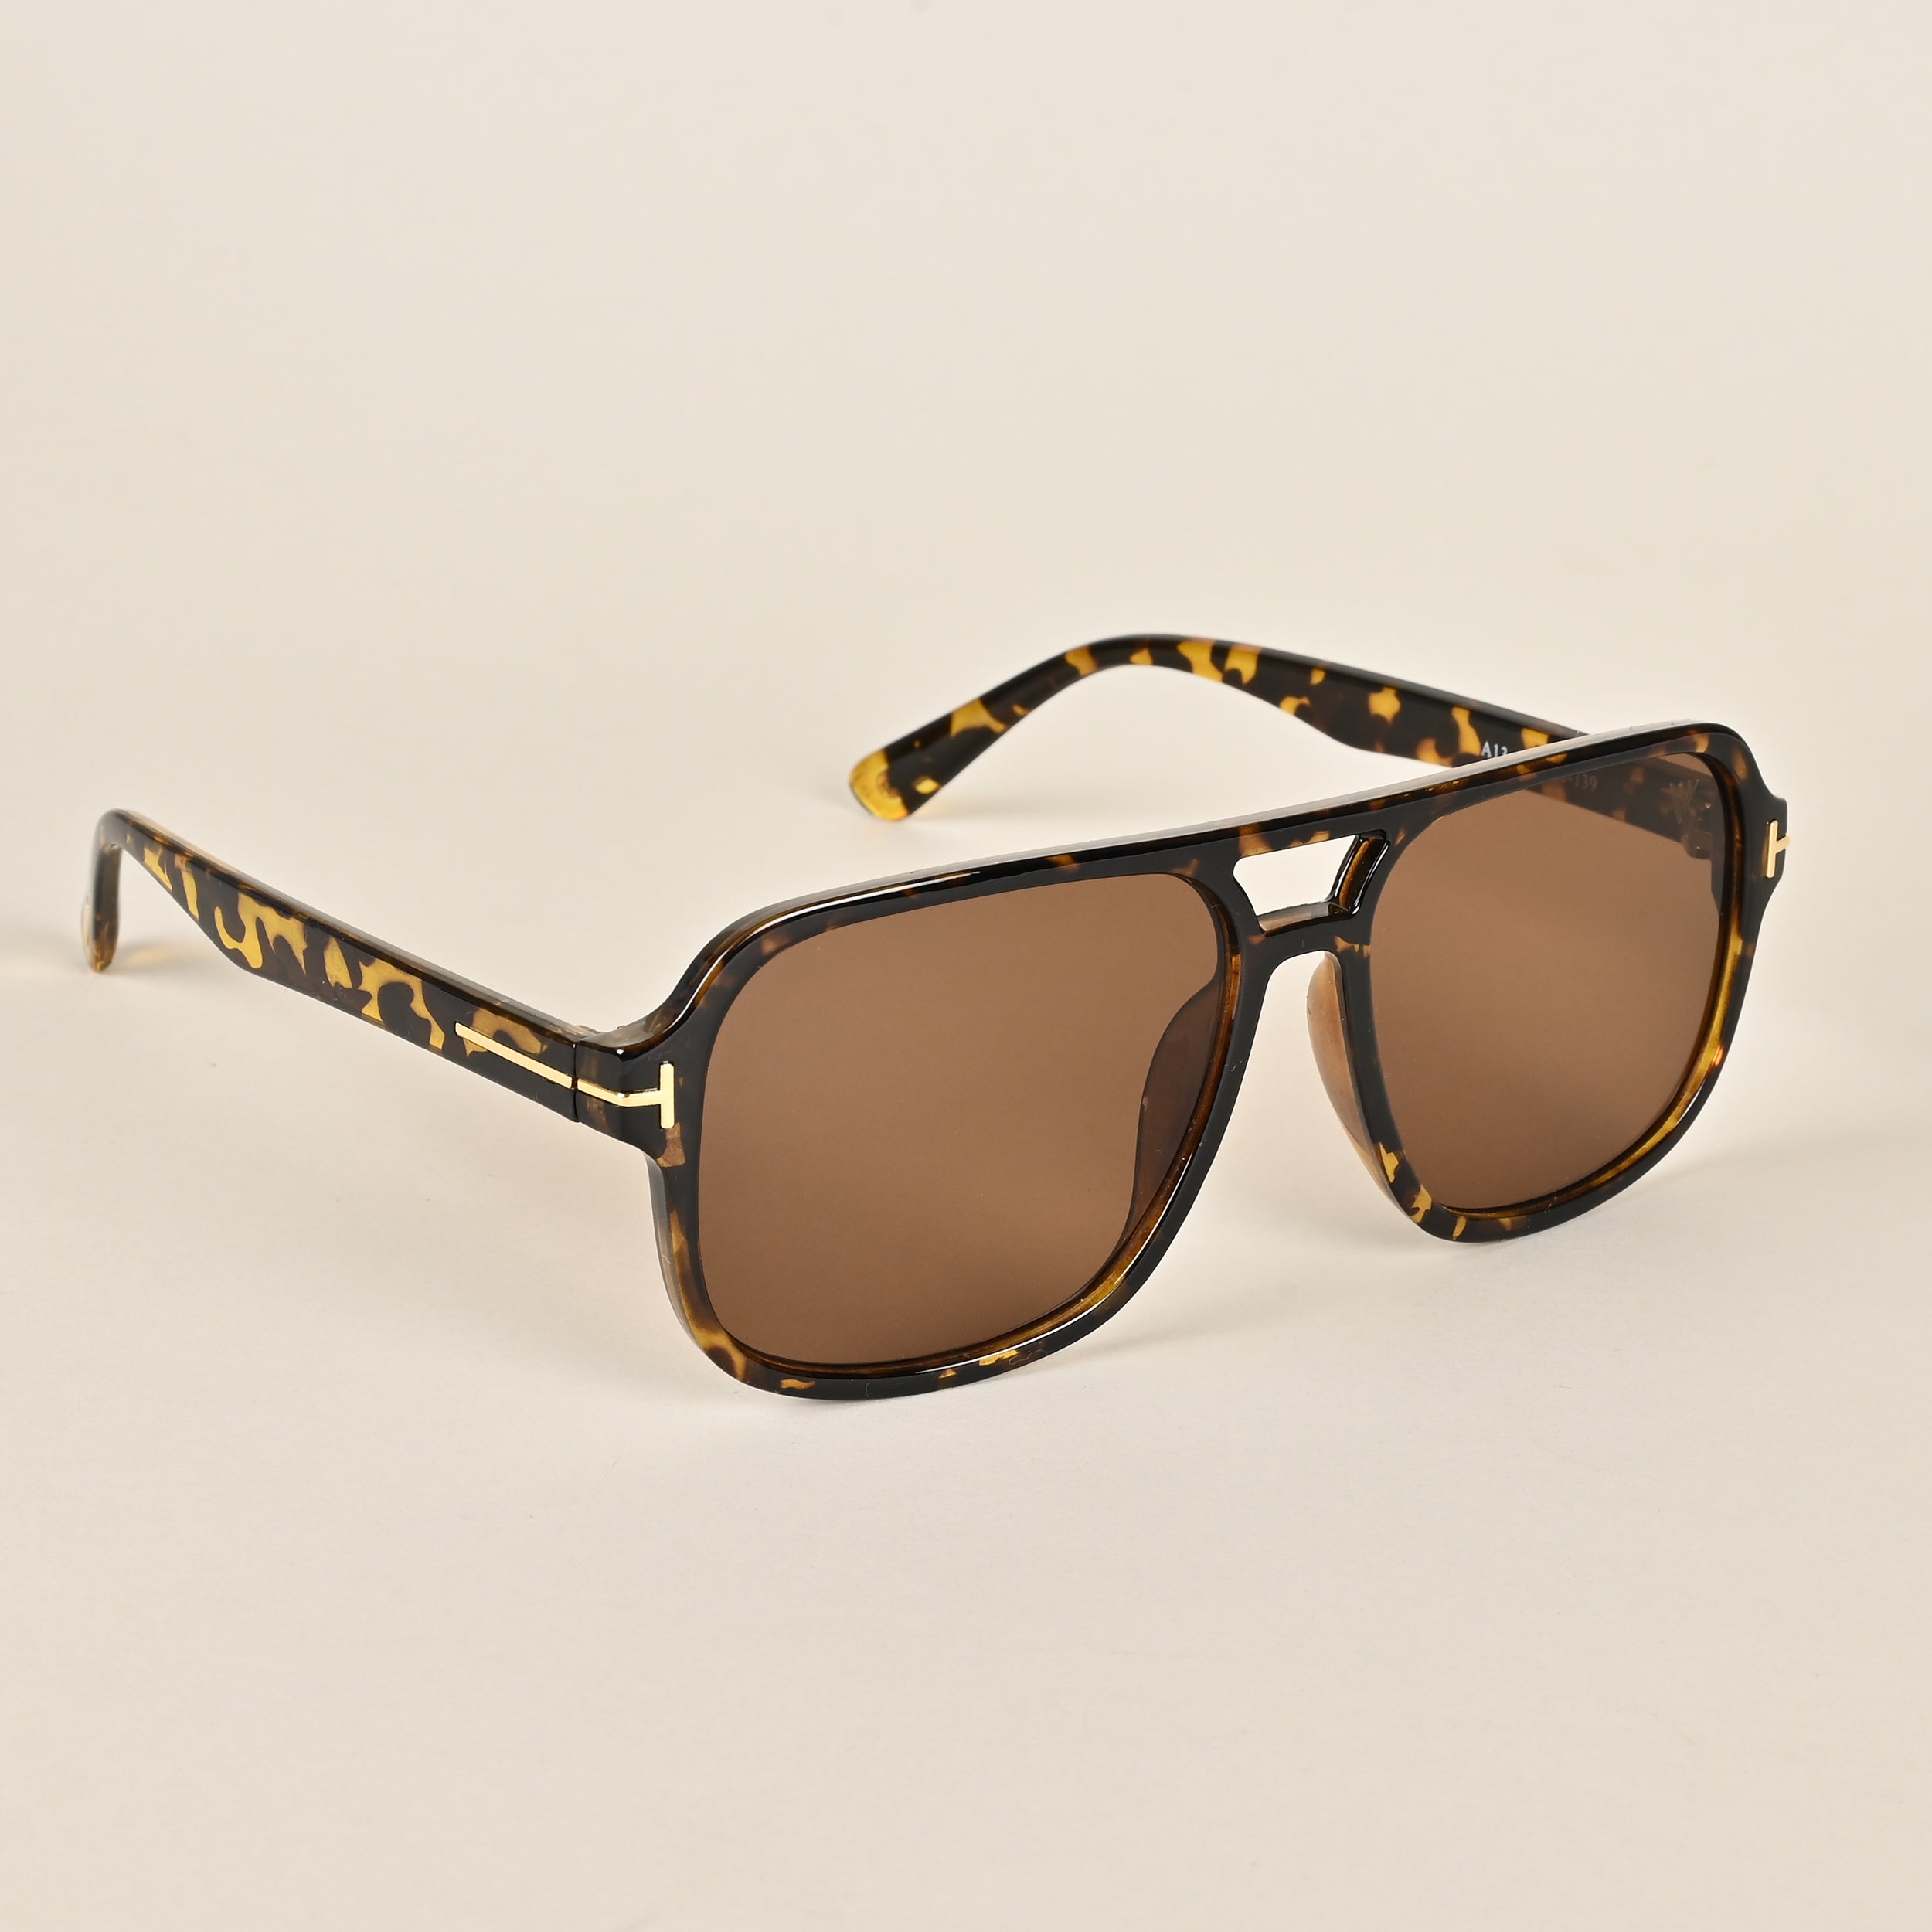 Voyage Brown Wayfarer Sunglasses - MG3941